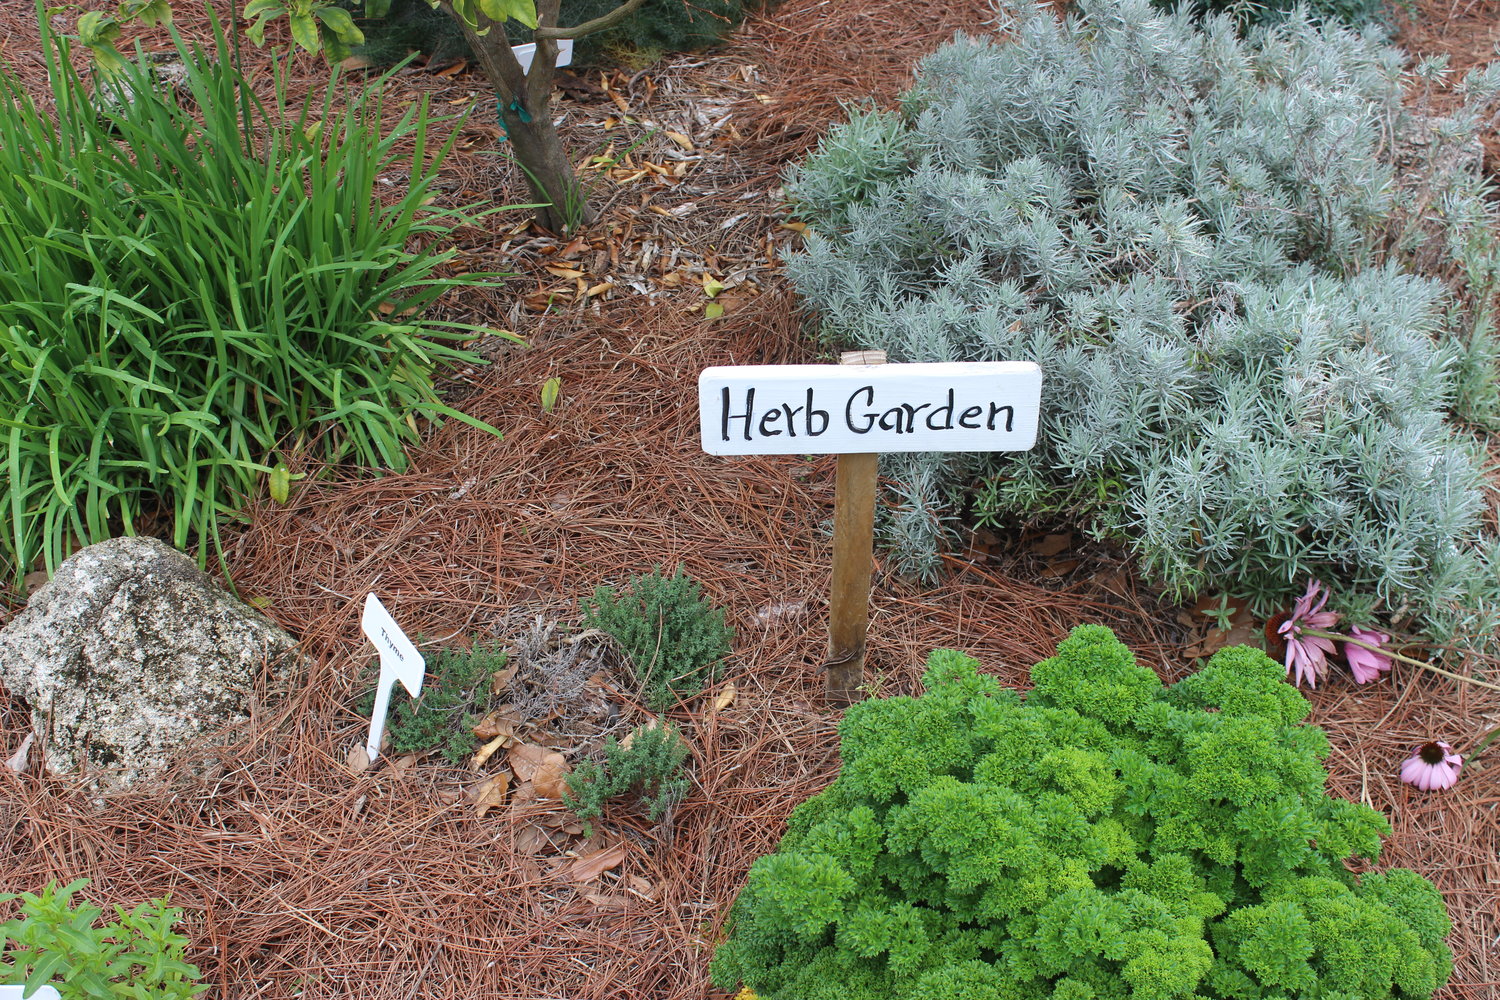 The Beaches Museum herb garden